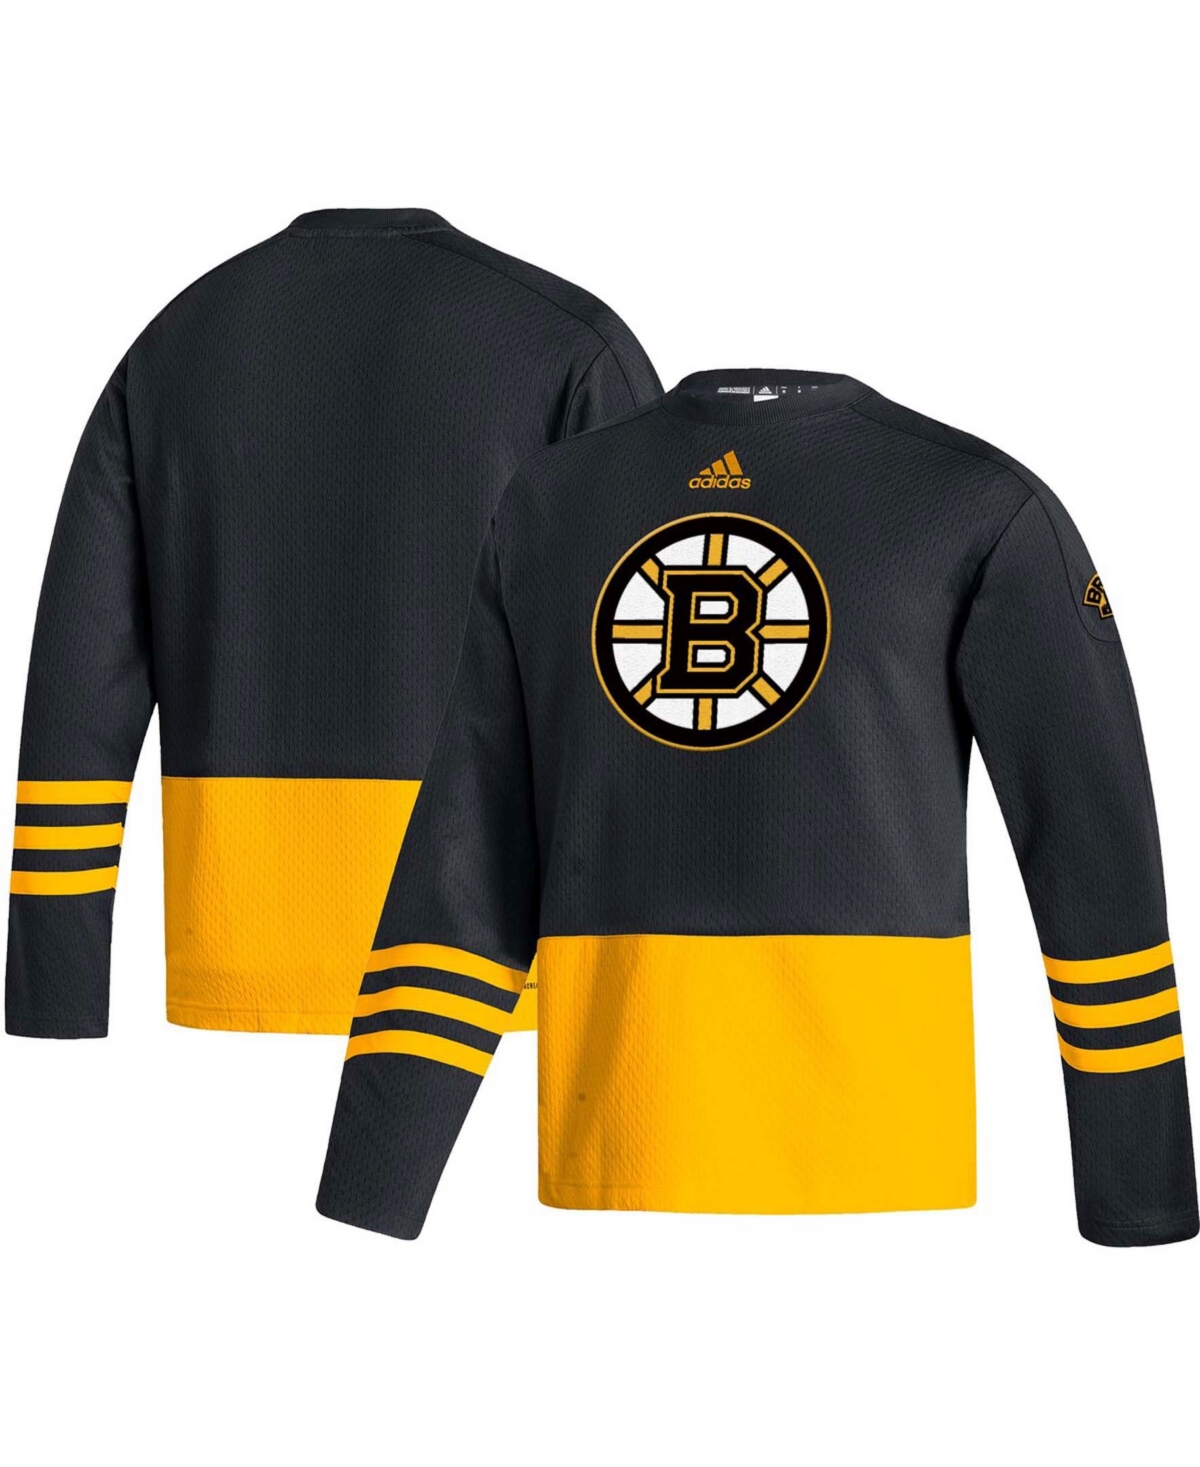 Men's Black Boston Bruins Logo Aeroready Pullover Sweater - Black